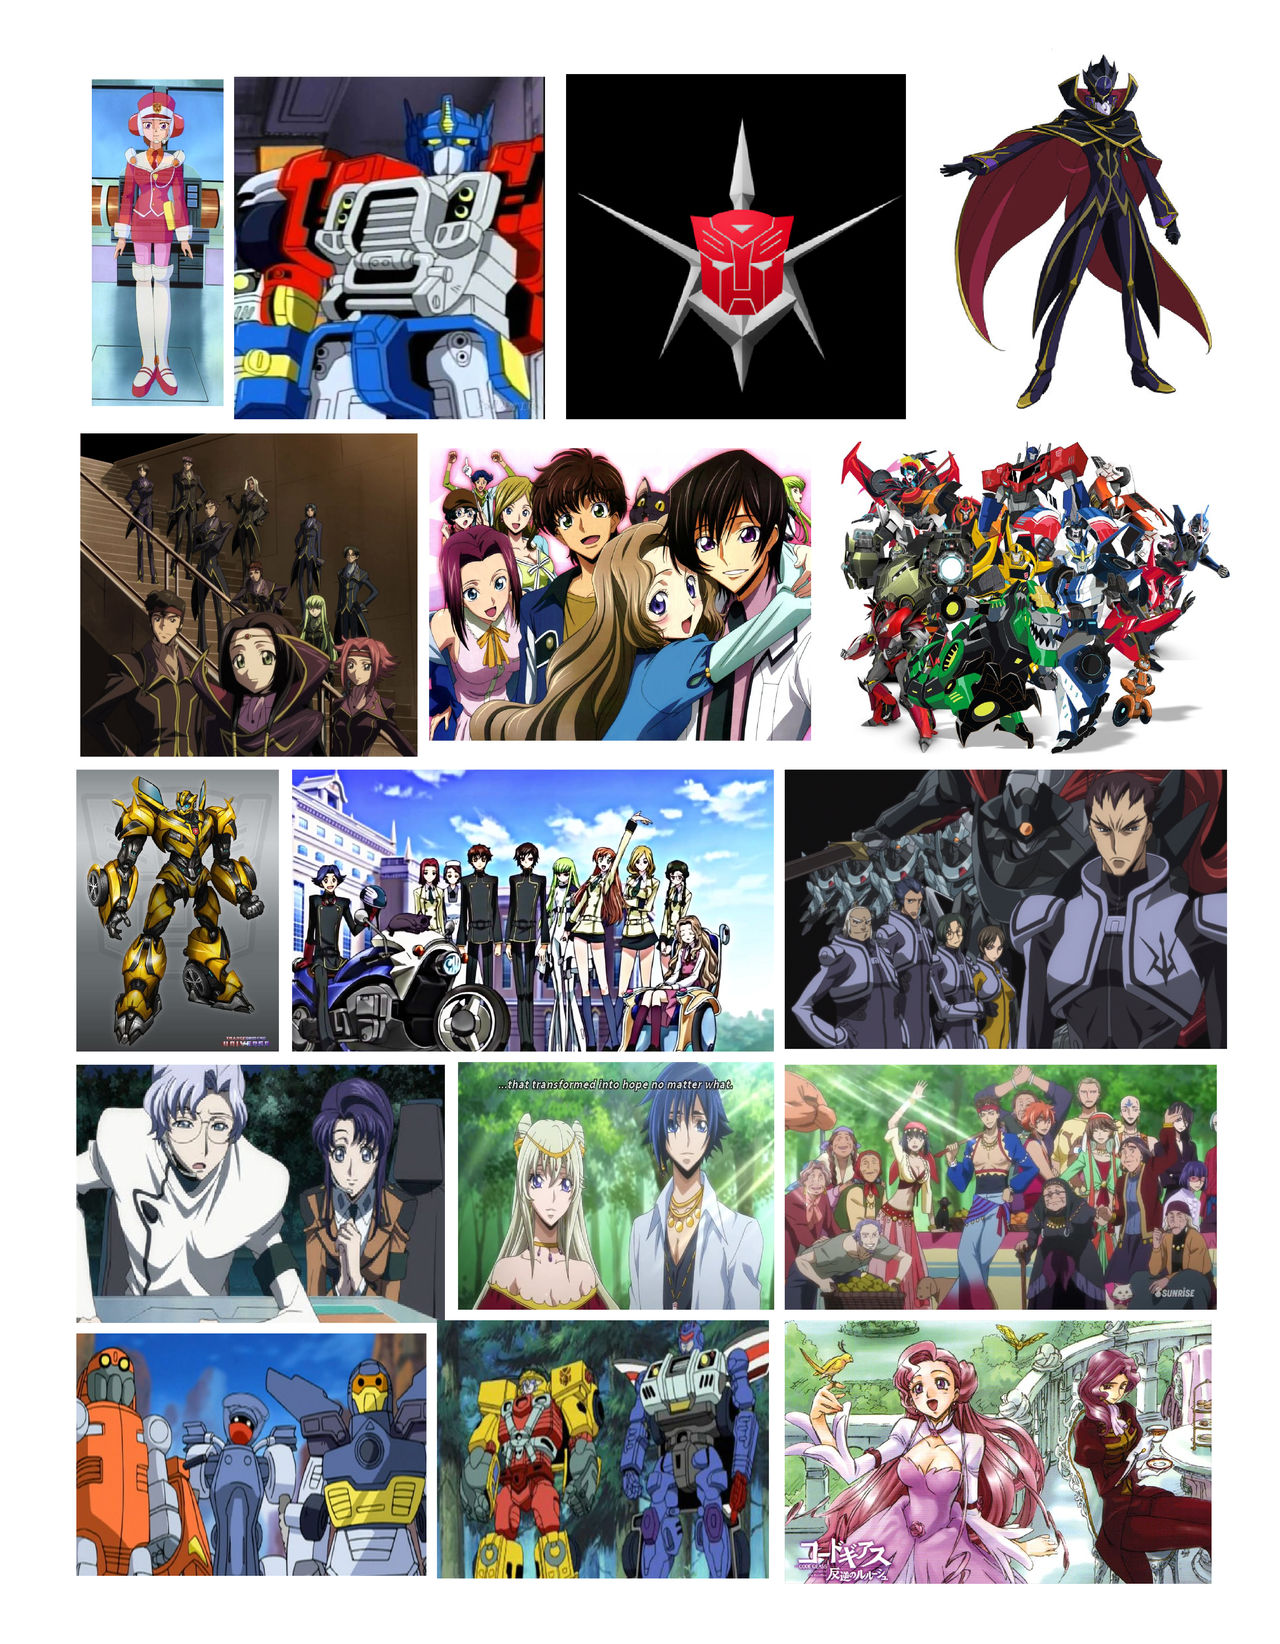 My mecha anime tierlist v3 by TransformFab322 on DeviantArt